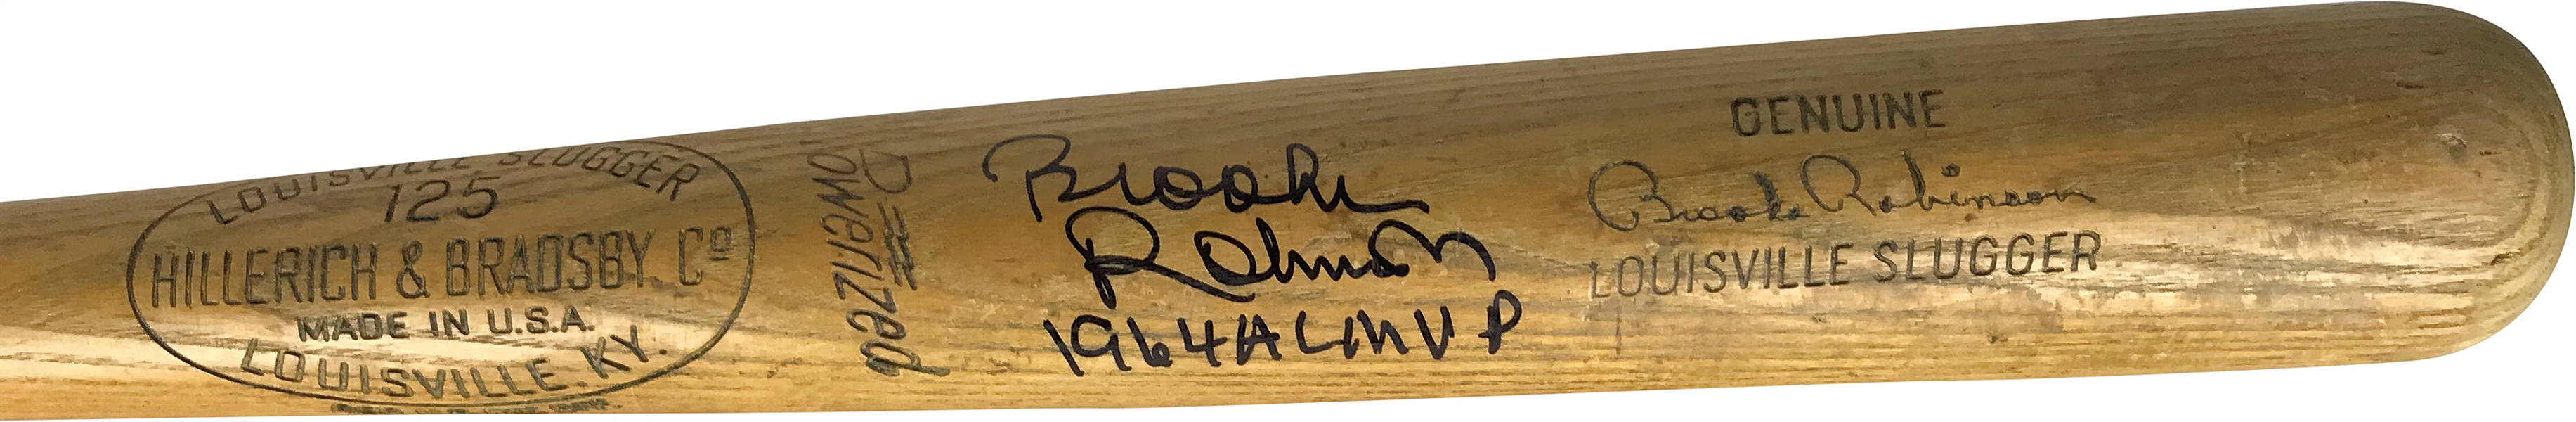 Brooks Robinson Signed & Game Used W166 Baseball Bat During Historic 1964 MVP Season! PSA/DNA GU 8.5